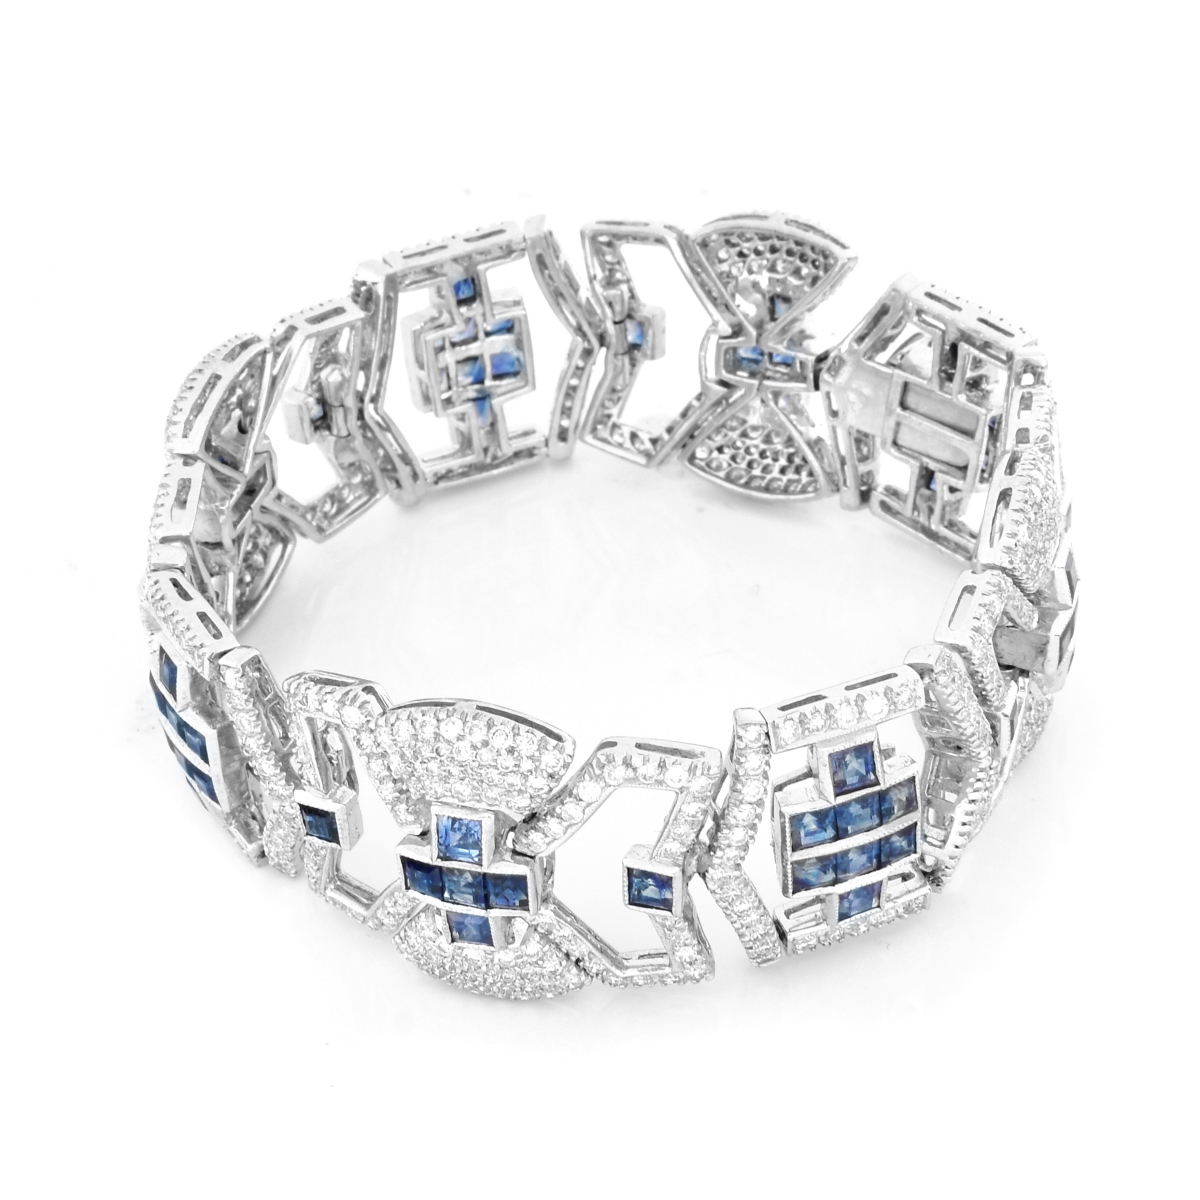 Sapphire, Diamond and 18K Gold Bracelet